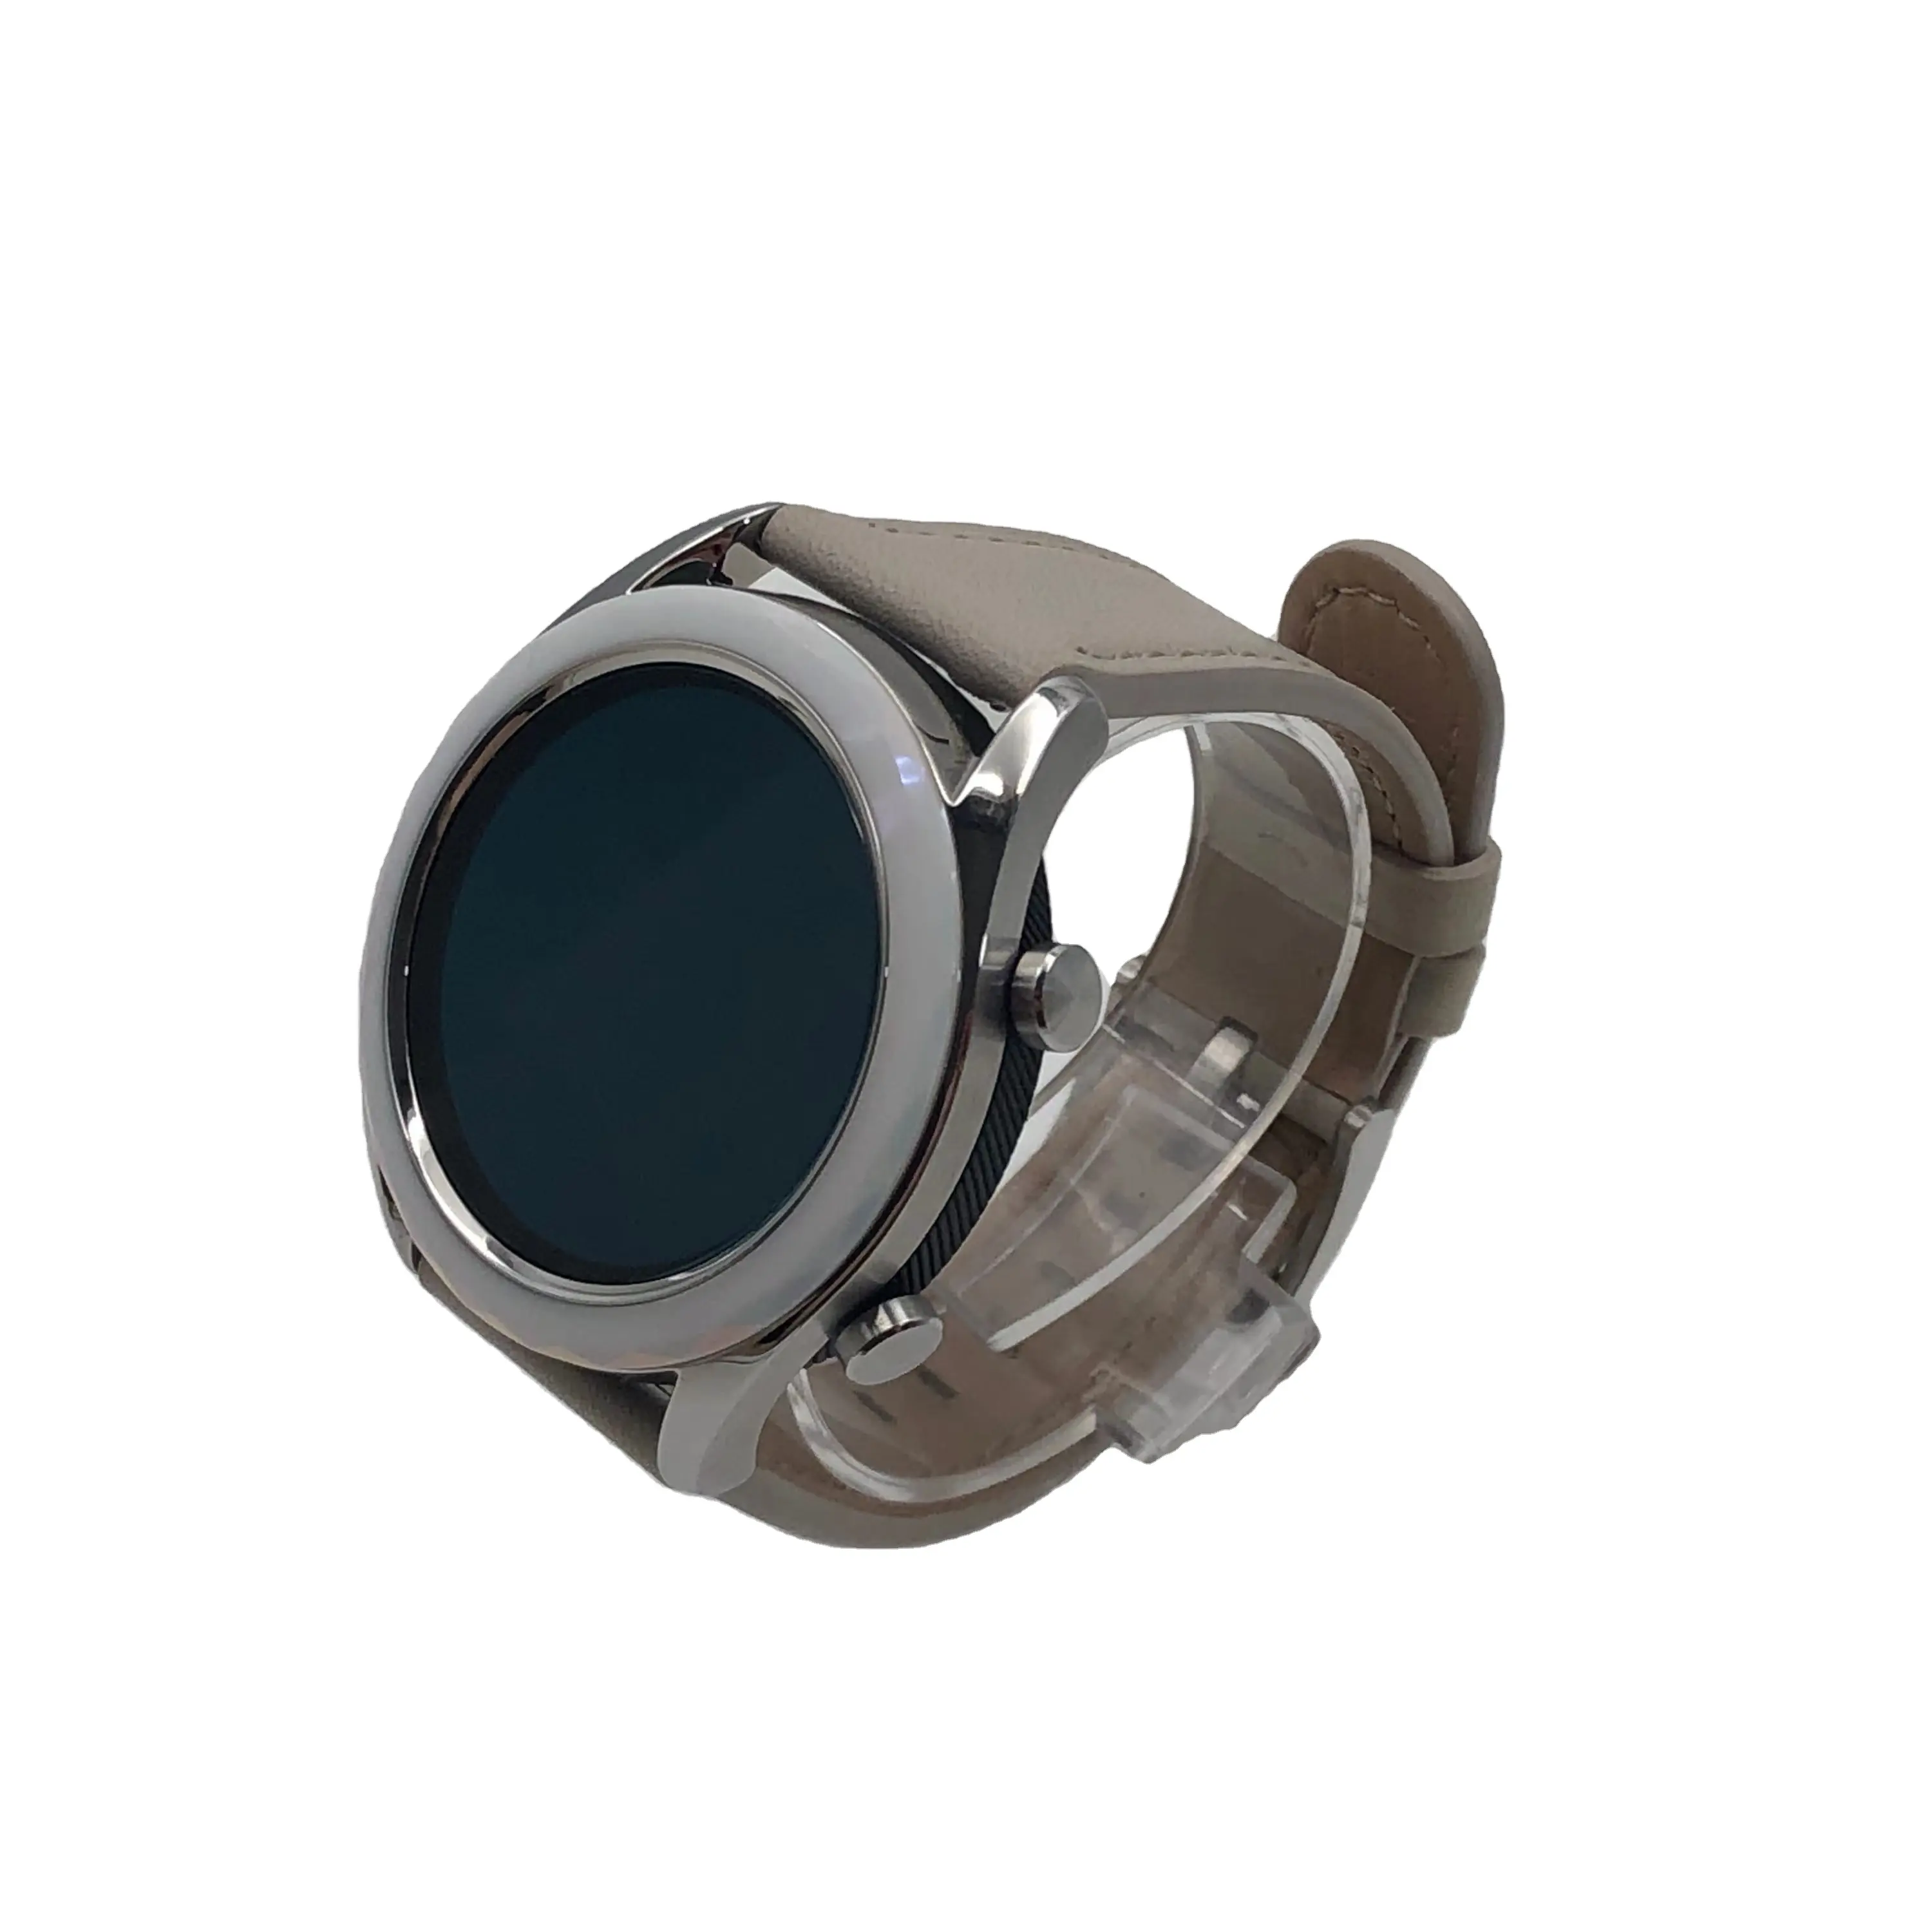 Wholesale Used Original Smart watch for huawei WATCH GT 1 2 3 pro Built-in GPS Smart Watch water proof Heart Rate Tracker 14days